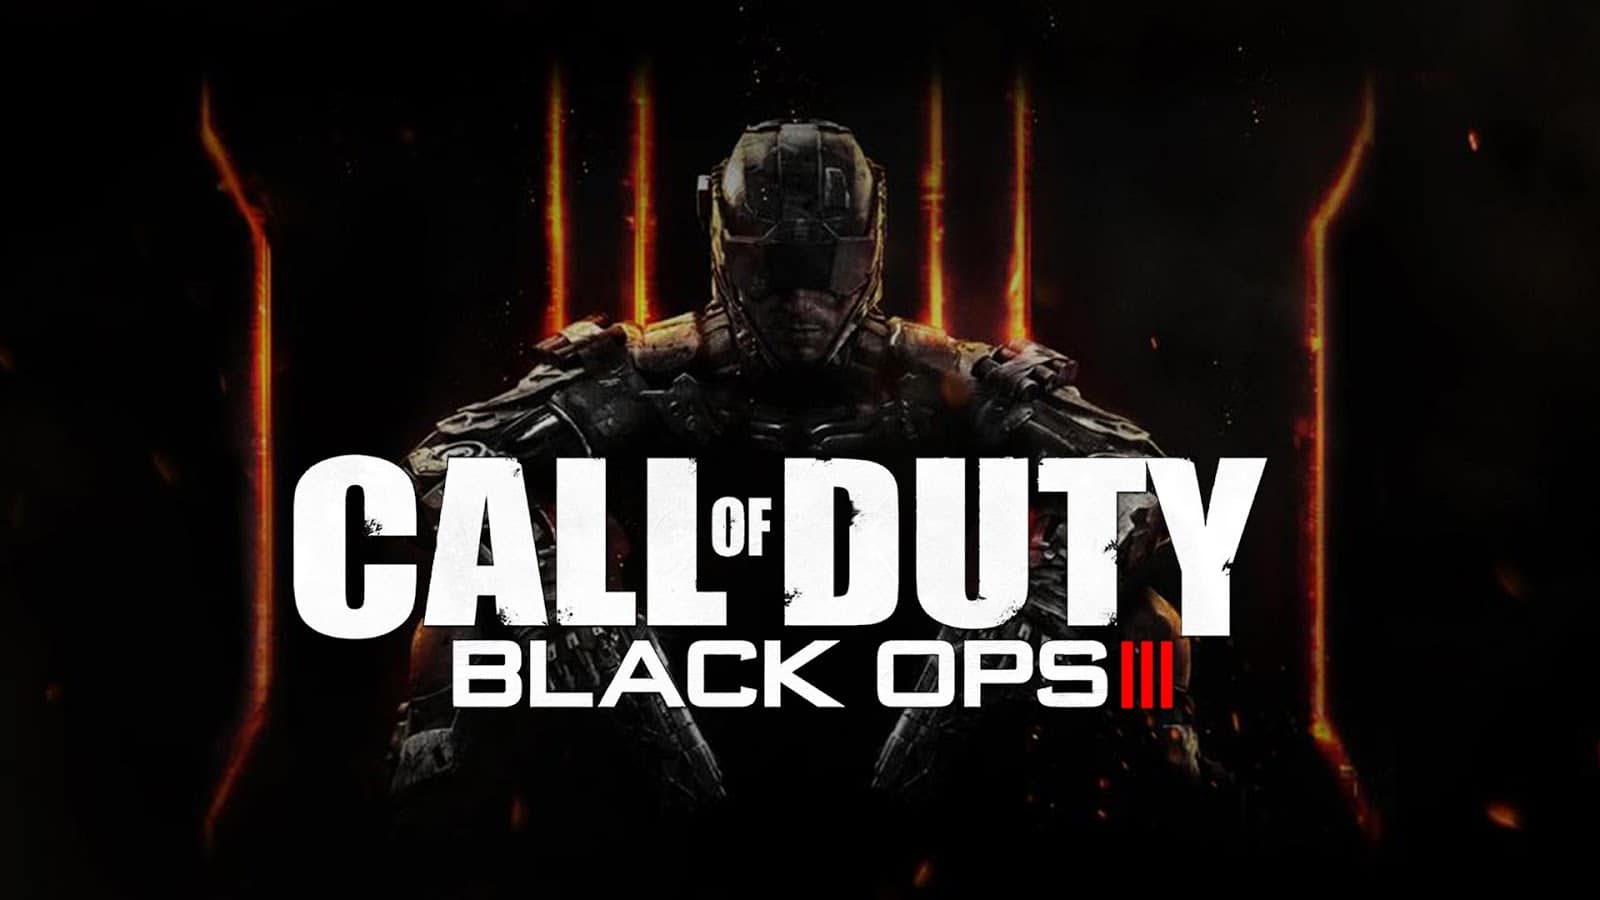 Meilleures ventes de jeux PS4 - Call of Duty Black Ops III